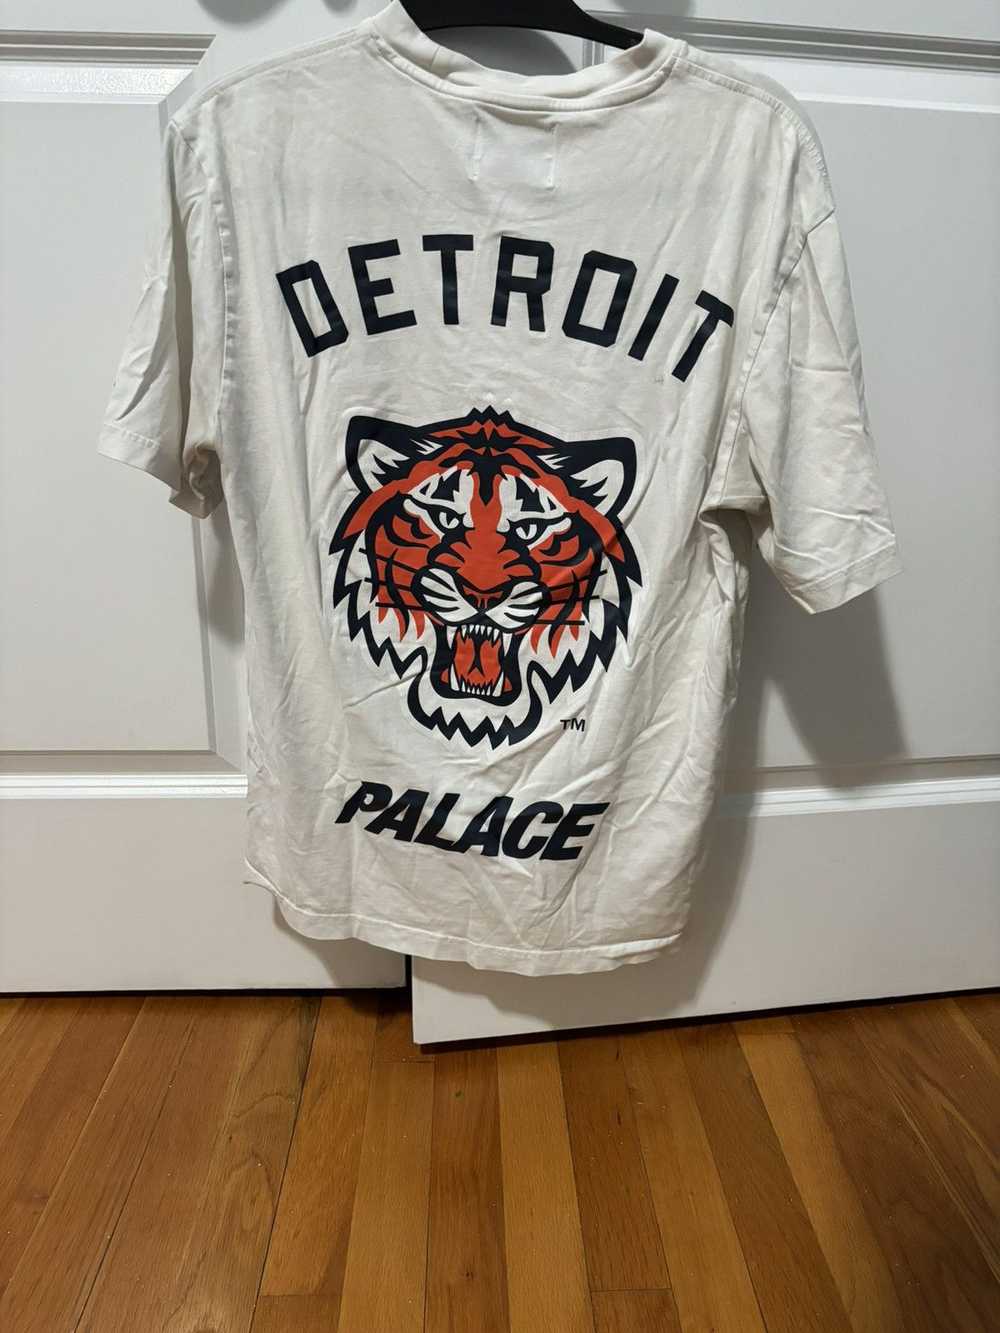 MLB × New Era × Palace Palace Detroit Tigers tee - image 2